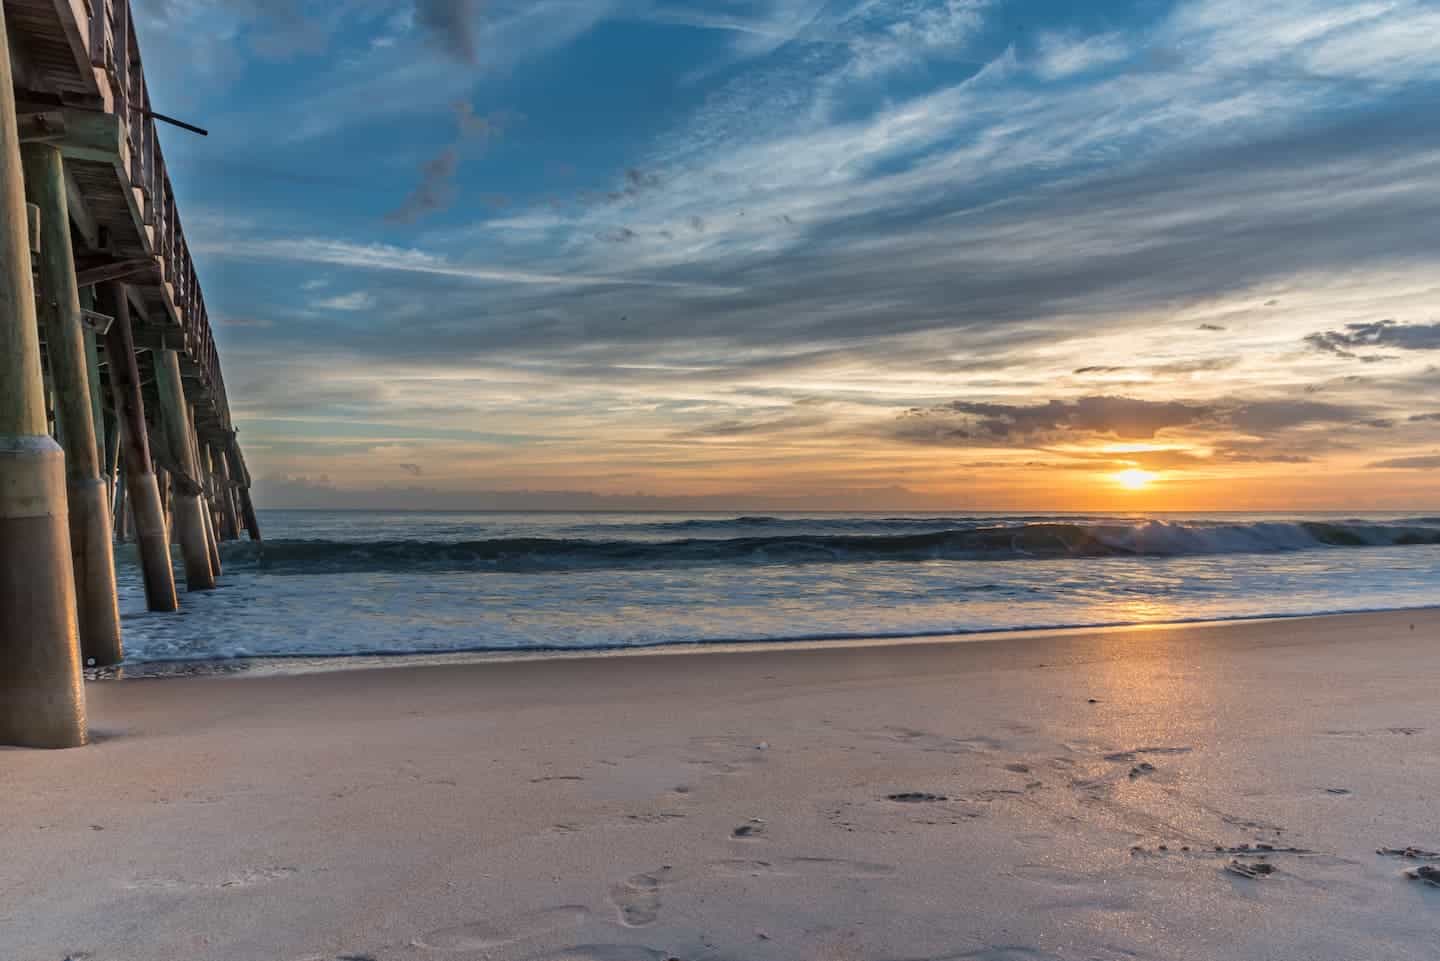 Gulf Coast Vacation - the perfect beach